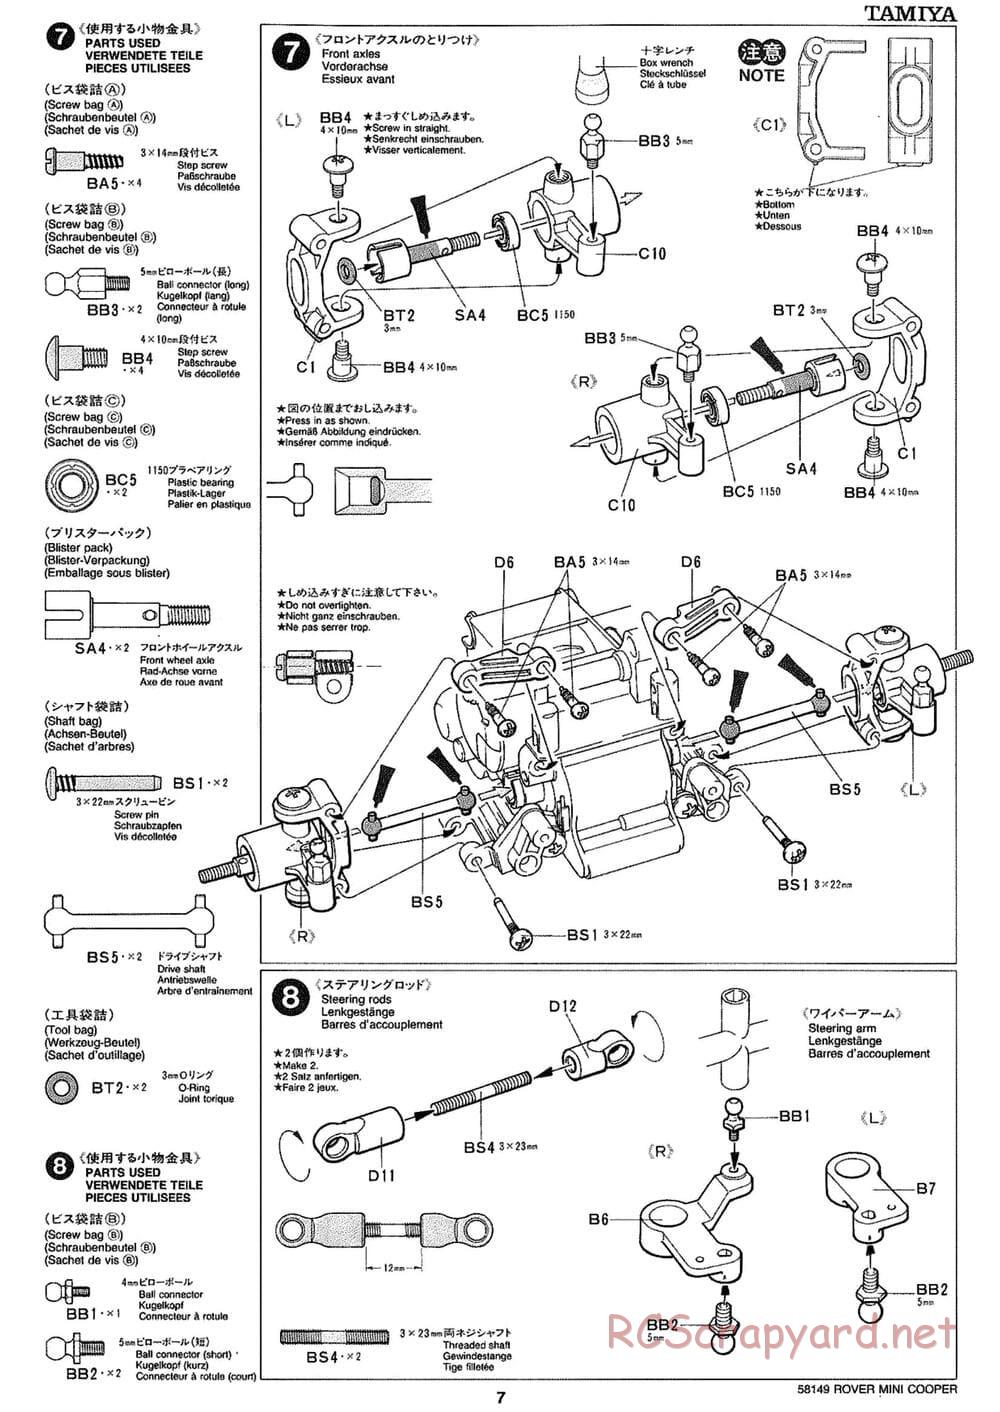 Tamiya - Rover Mini Cooper - M01 Chassis - Manual - Page 7